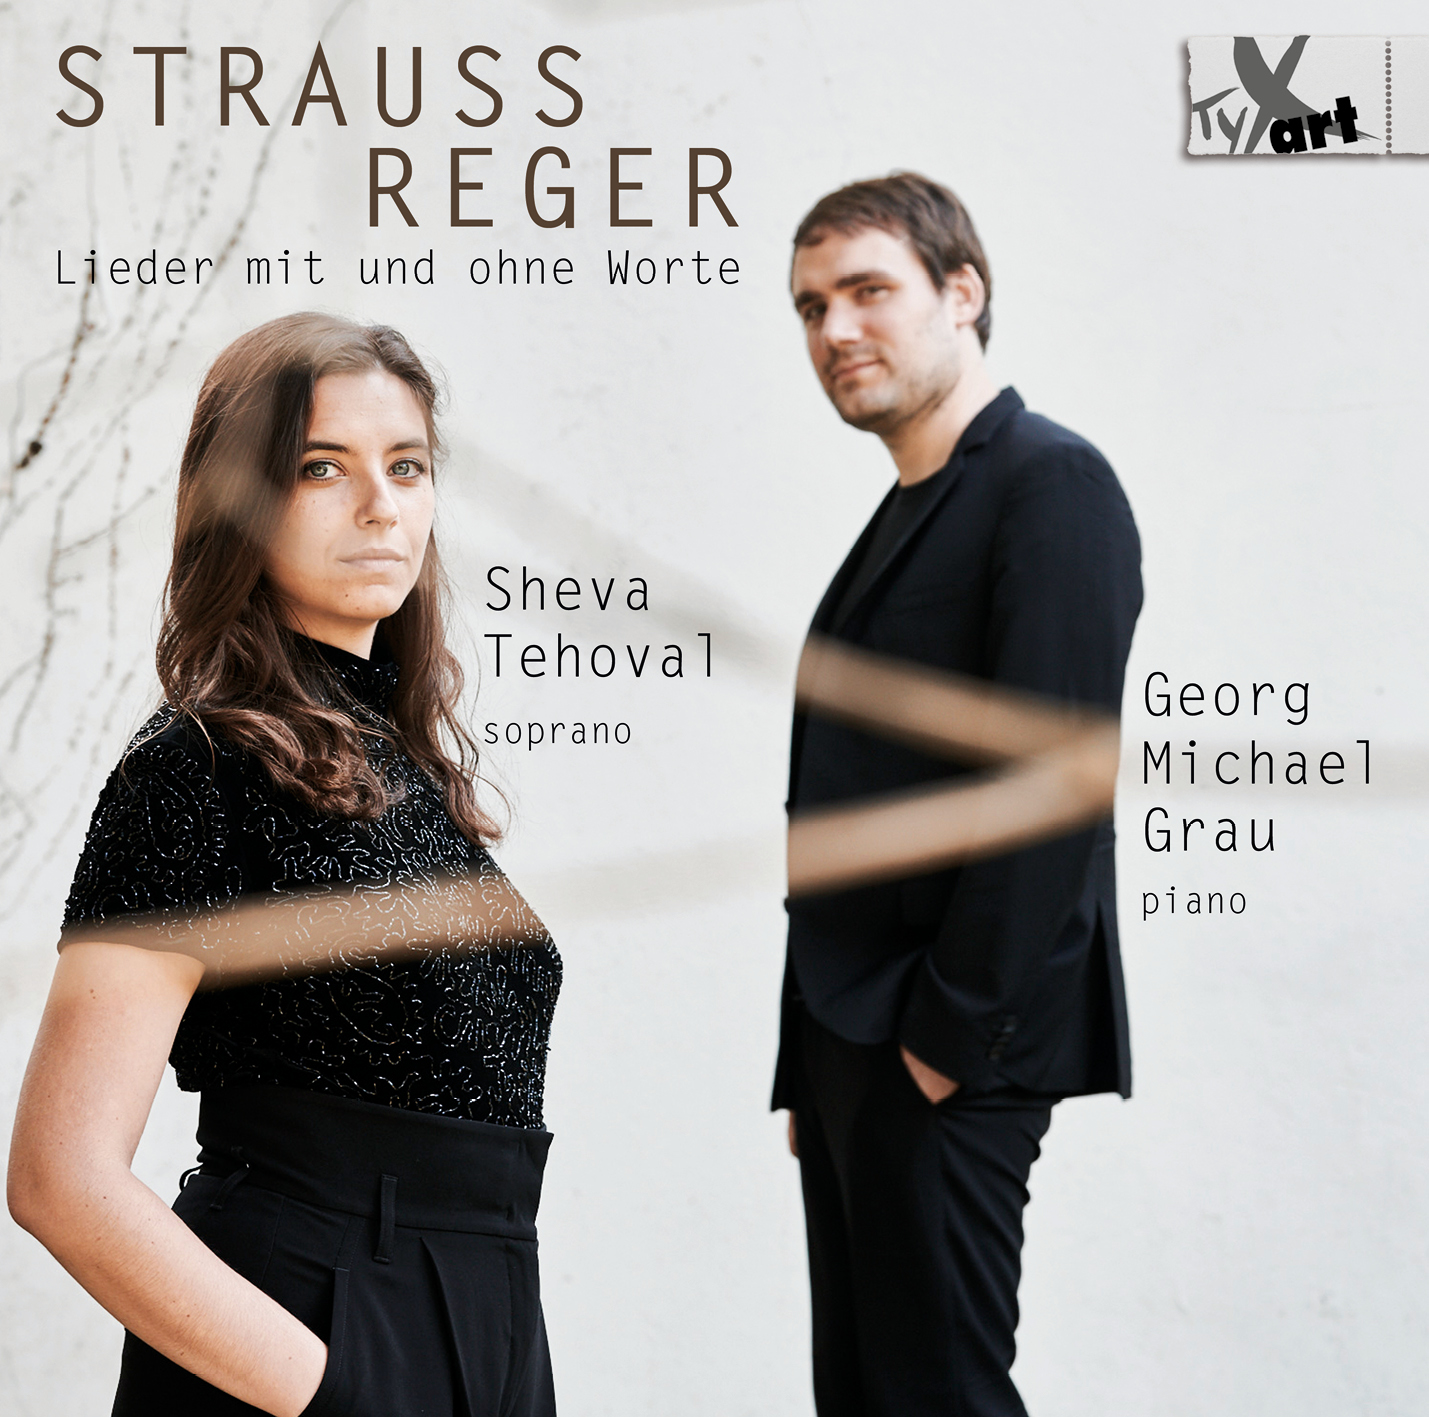 Strauss | Reger - Sheva Tehoval und Georg Michael Grau